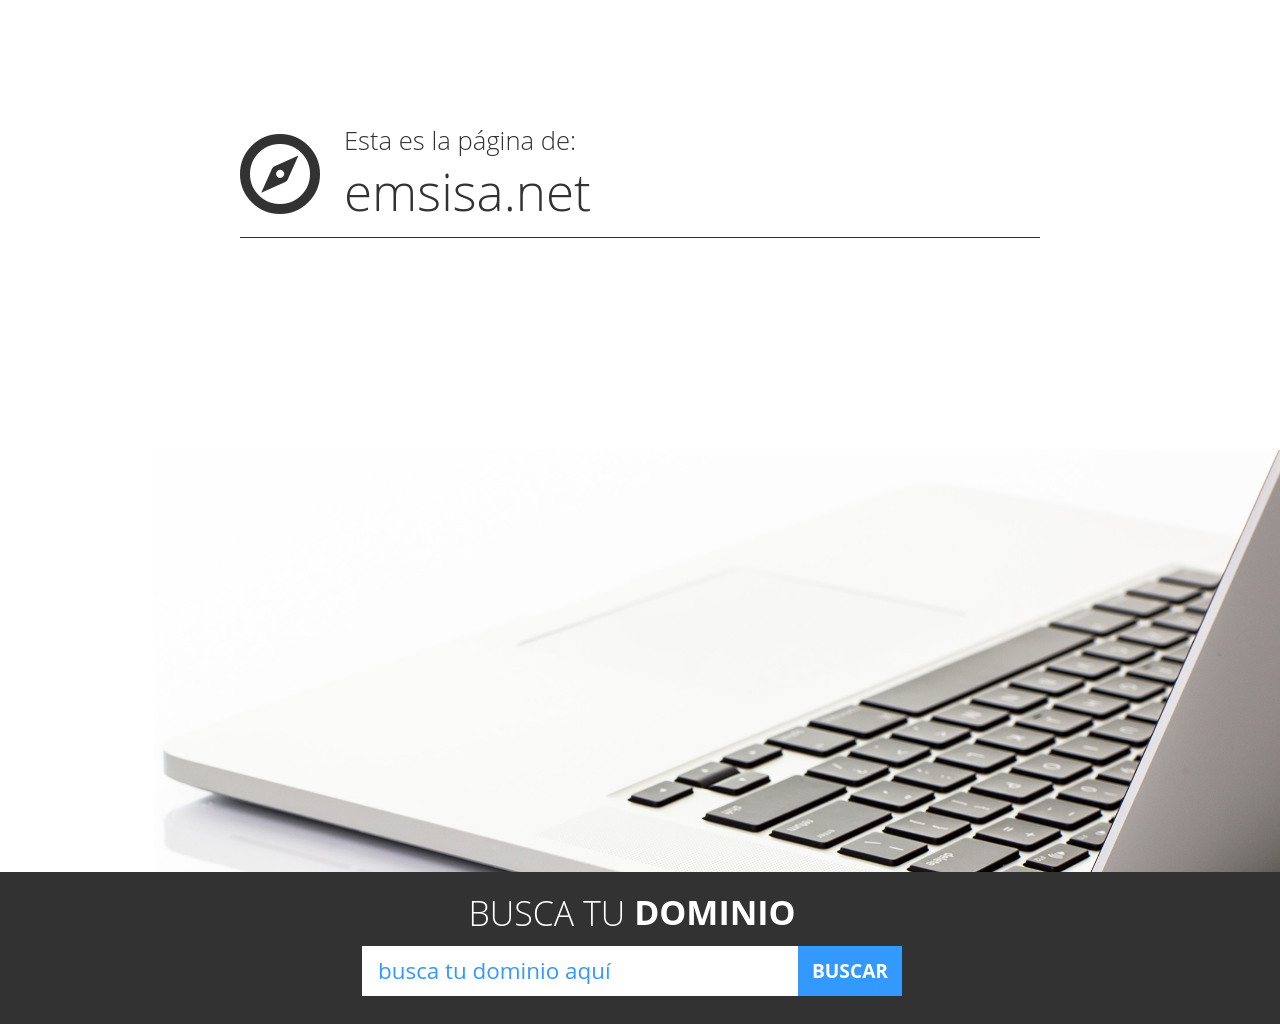 emsisa.net